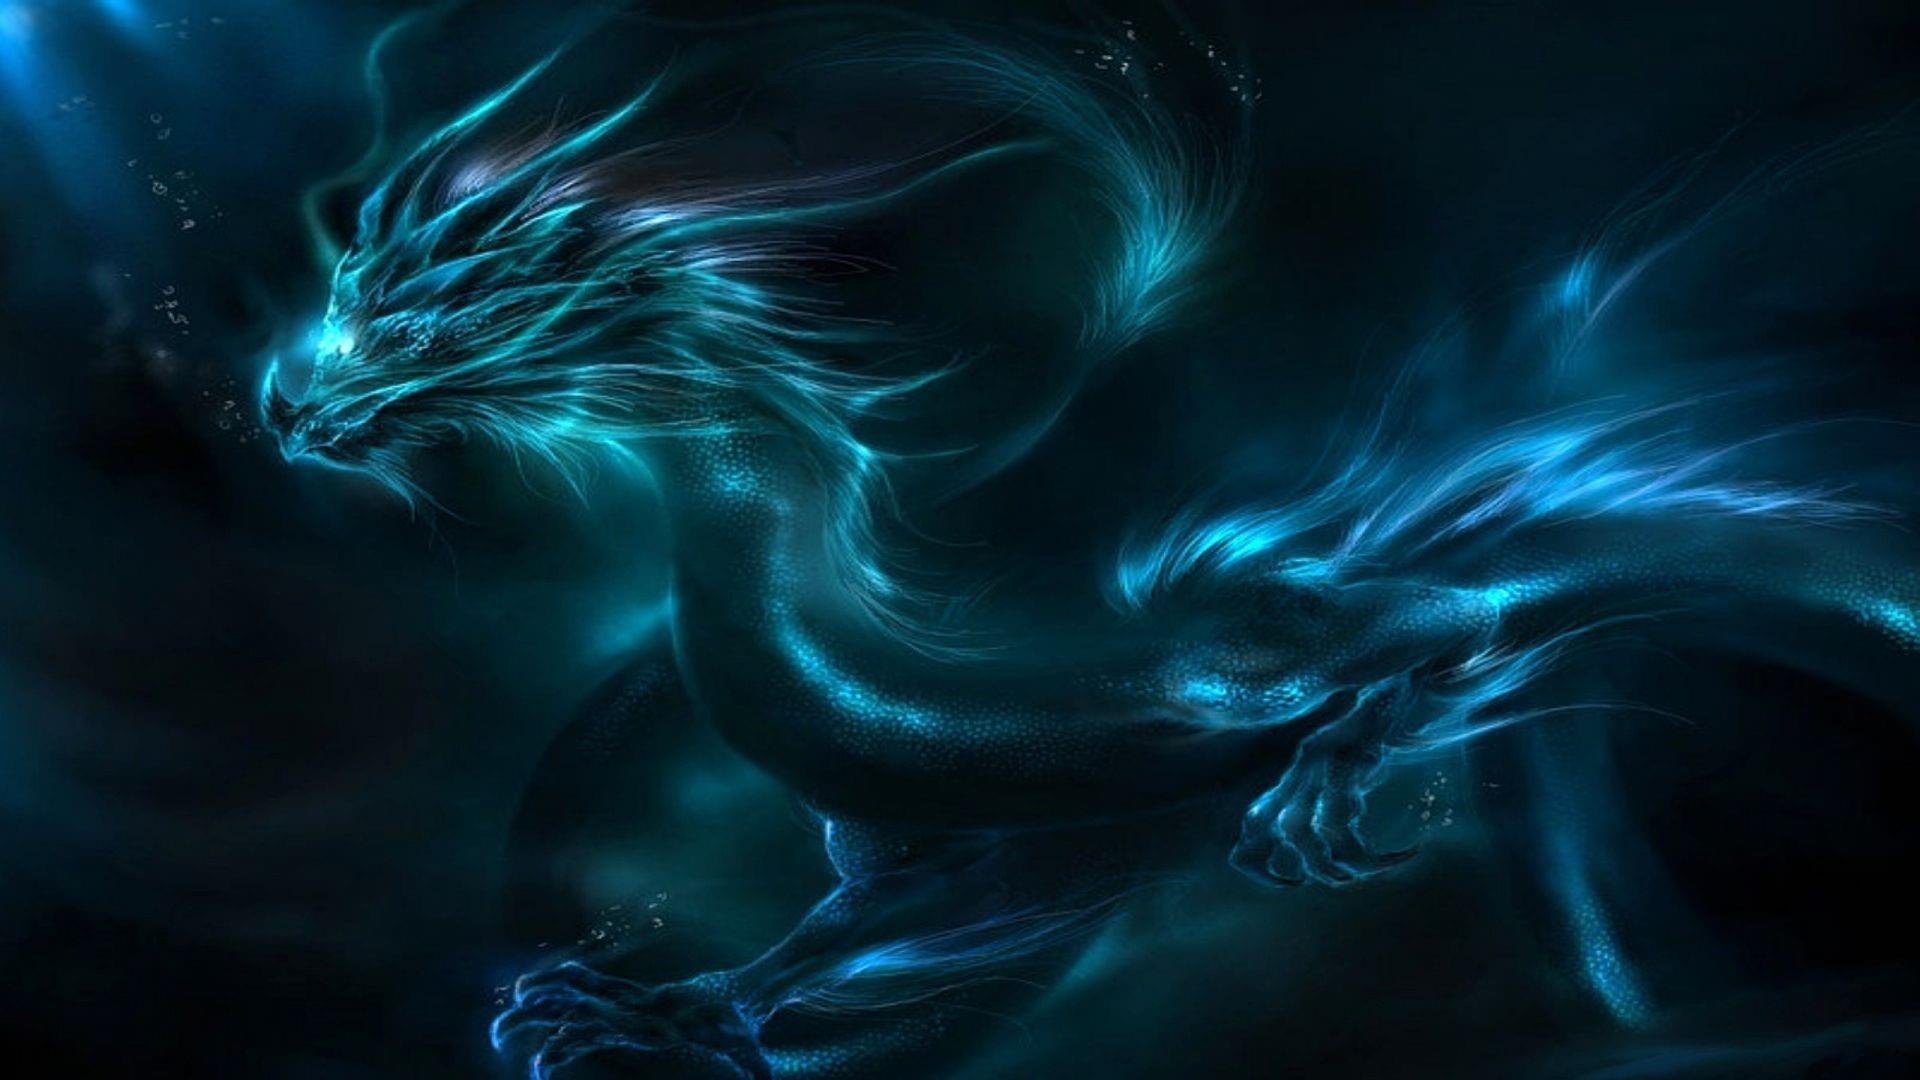 Blue Dragon Wallpaper (Picture)